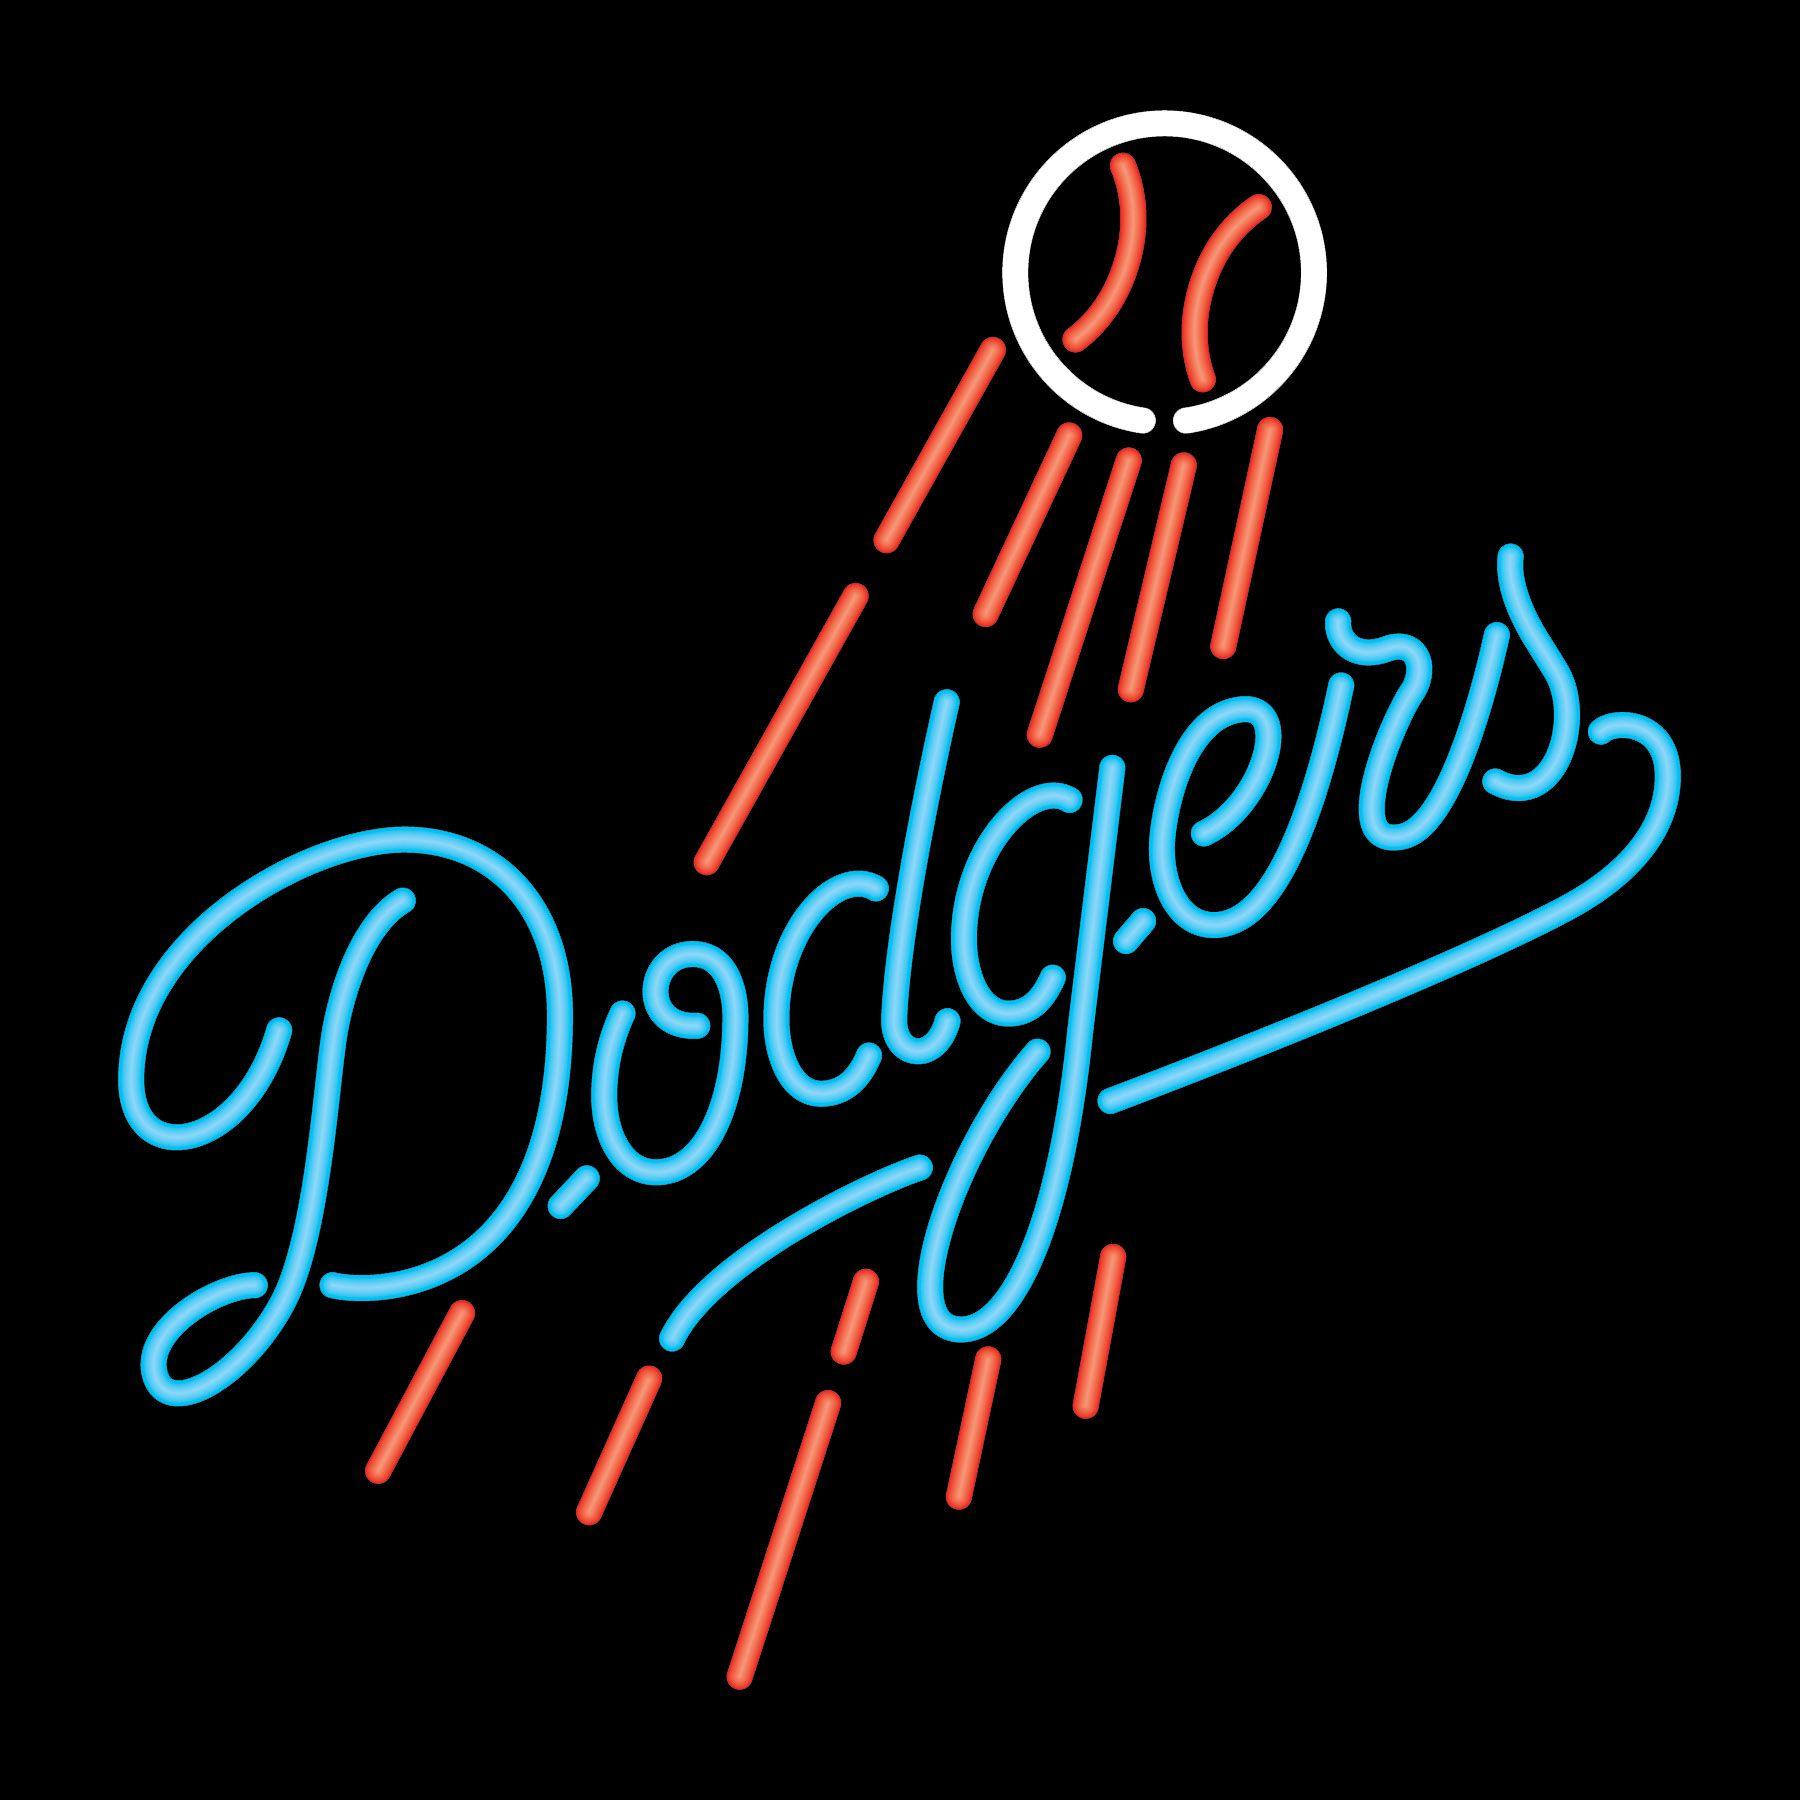 LA Dodgers Backgrounds Wallpaper Cave